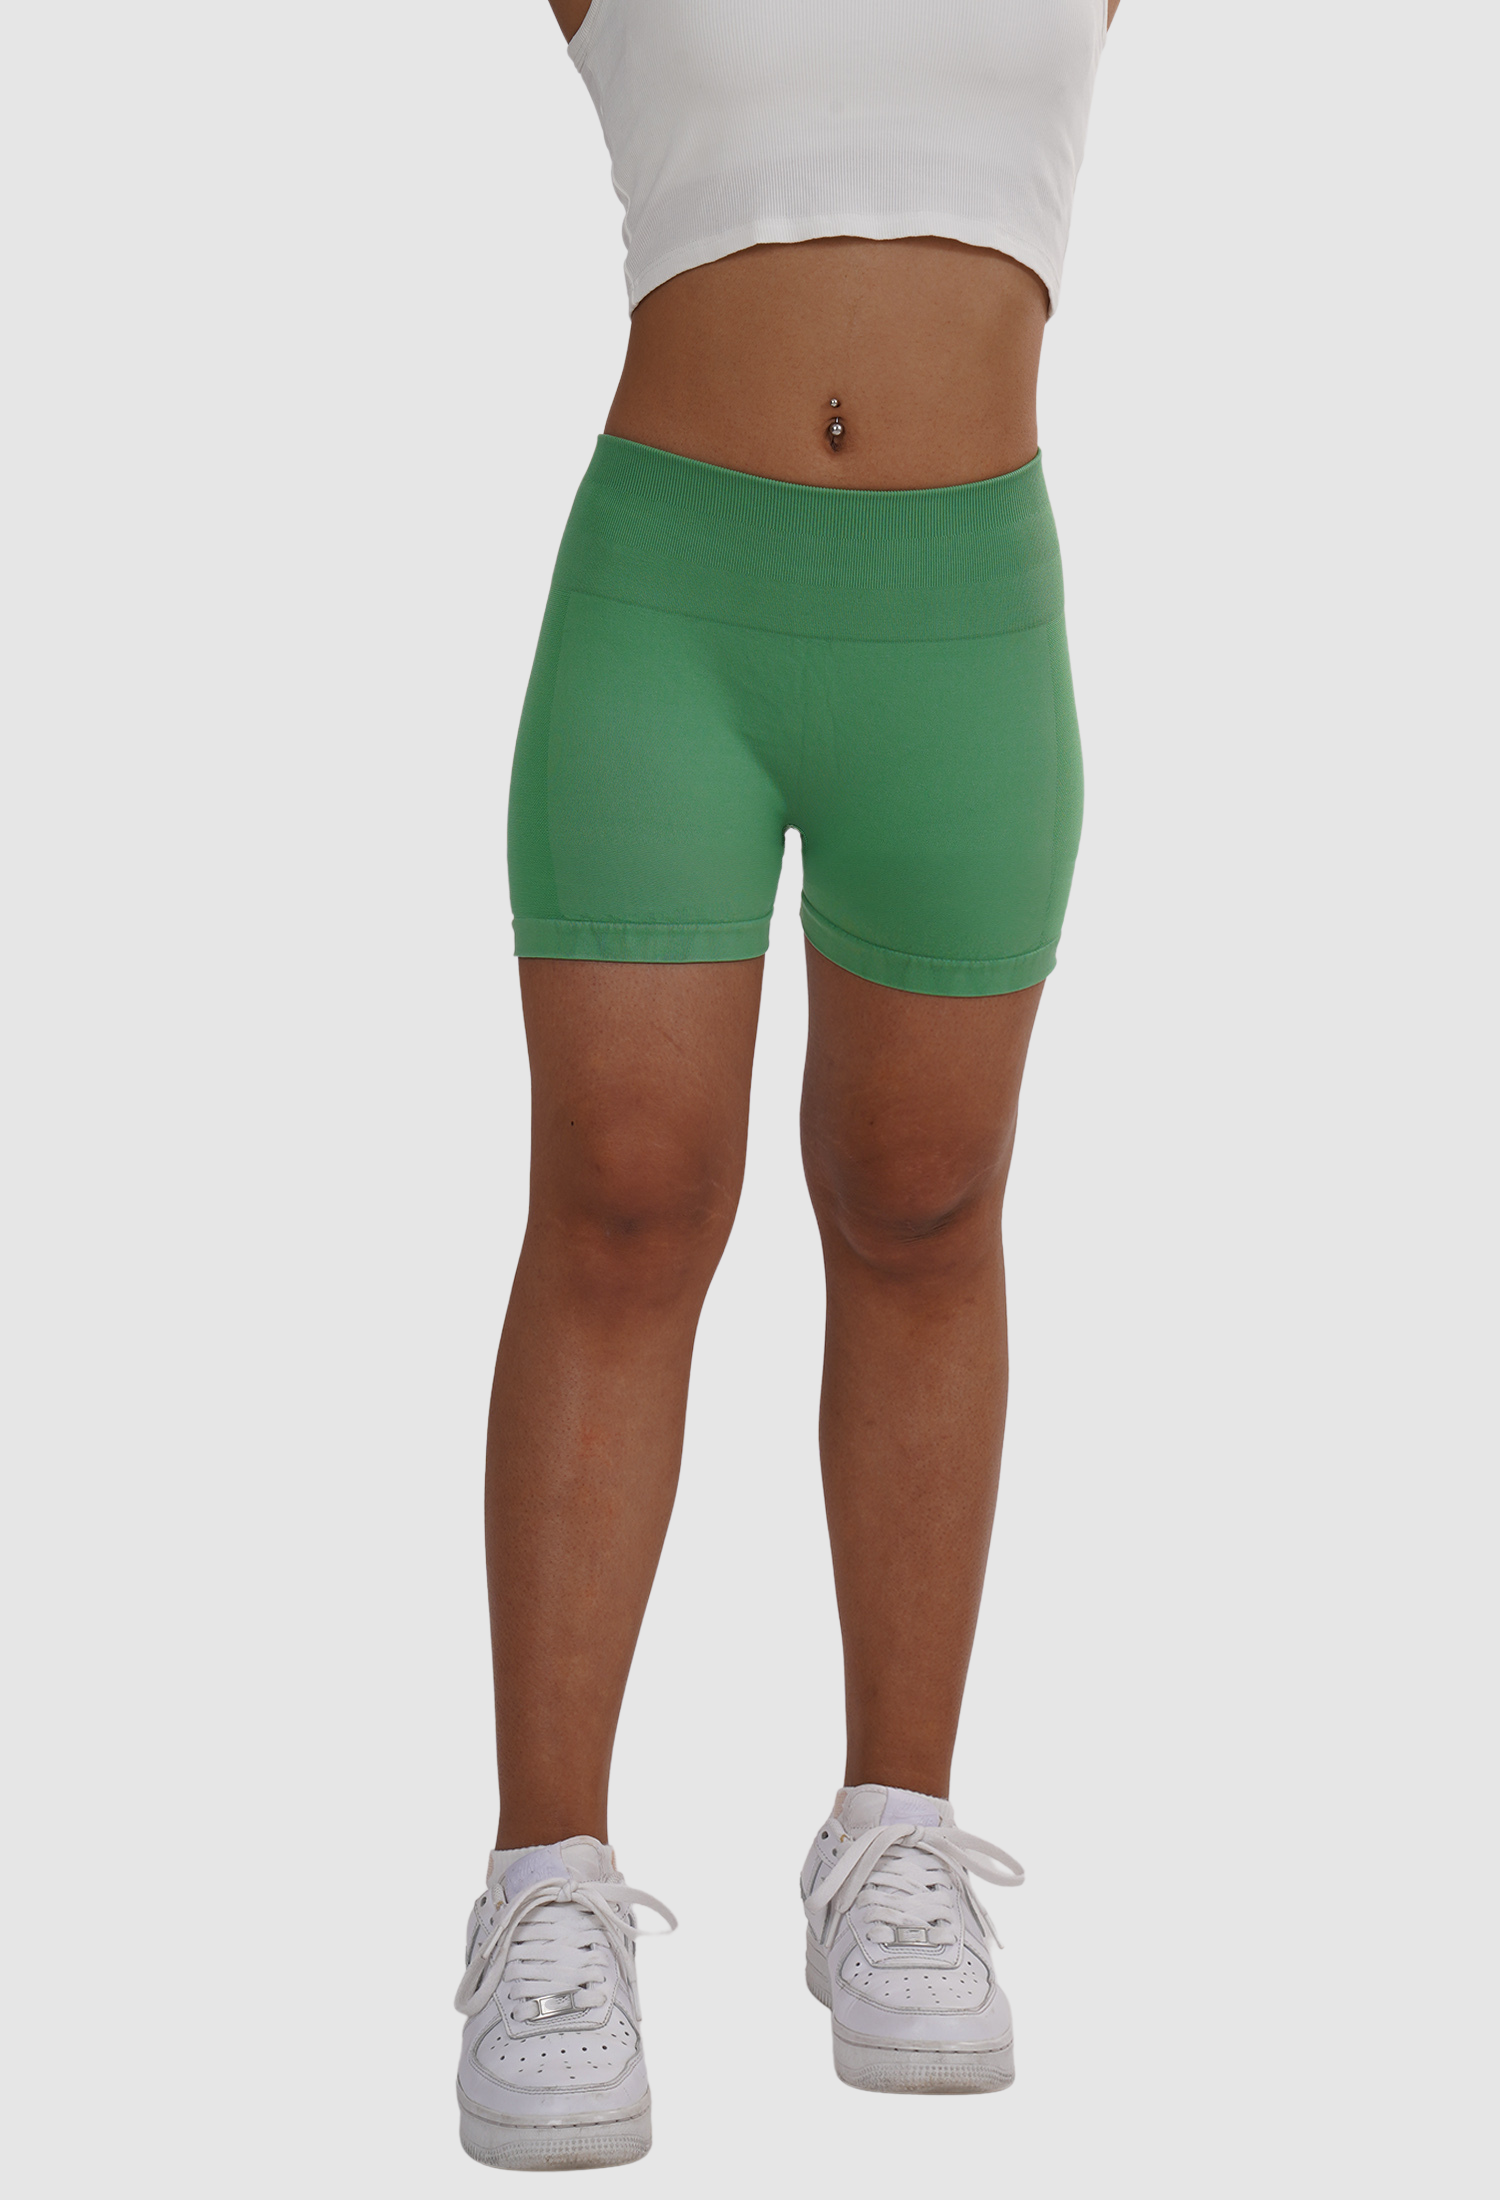 Bestselling Workout Shorts  Women's Butt-lifting Gym Shorts